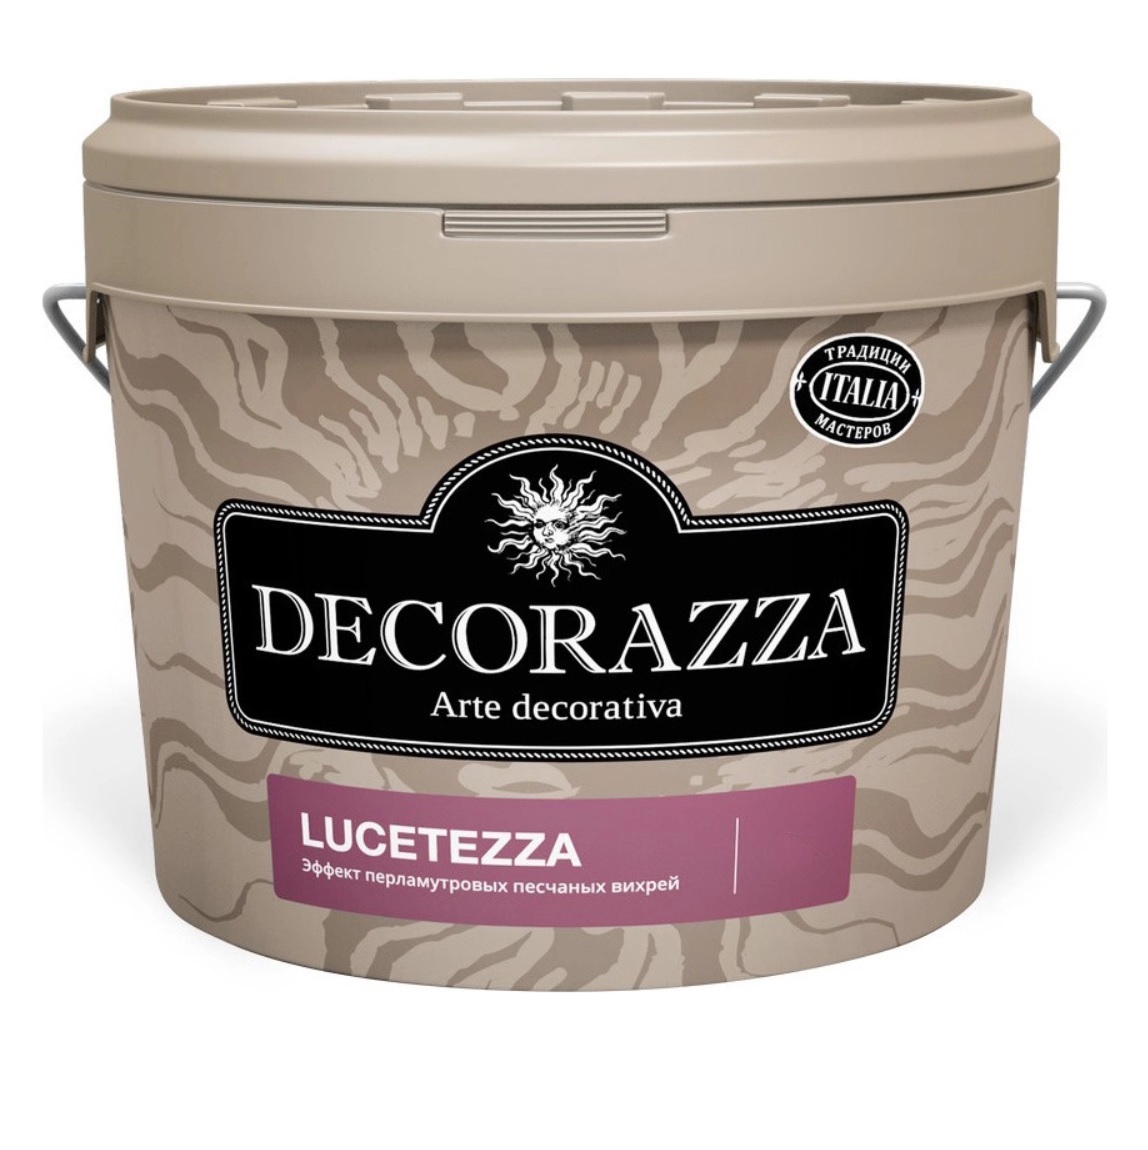 Декоративная краска Decorazza lucetezza база aluminium 5.0кг краска decorazza декор lucetezza база argento 5 кг dlc001 5